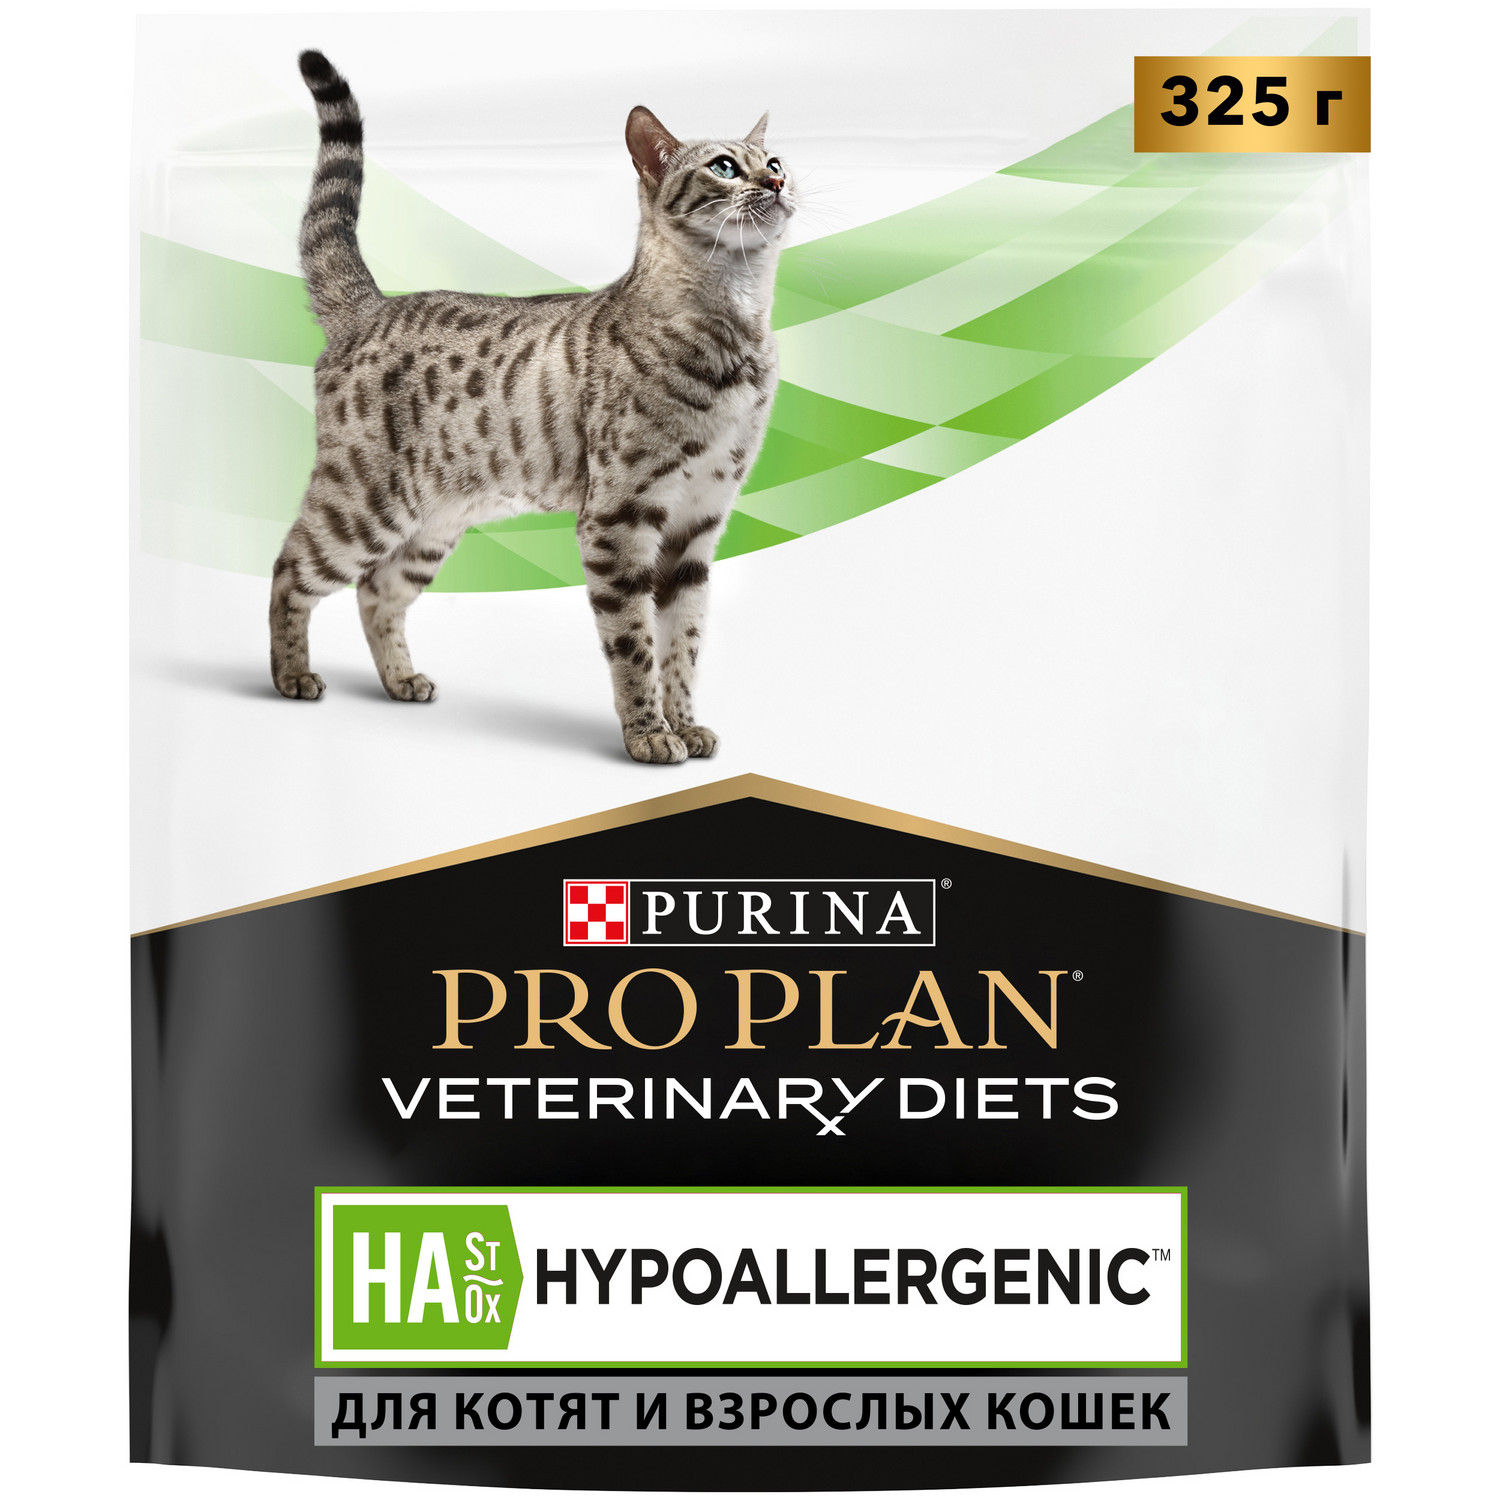 Корм для кошек Purina Pro Plan Veterinary diets HА профилактика аллергии 325г - фото 1